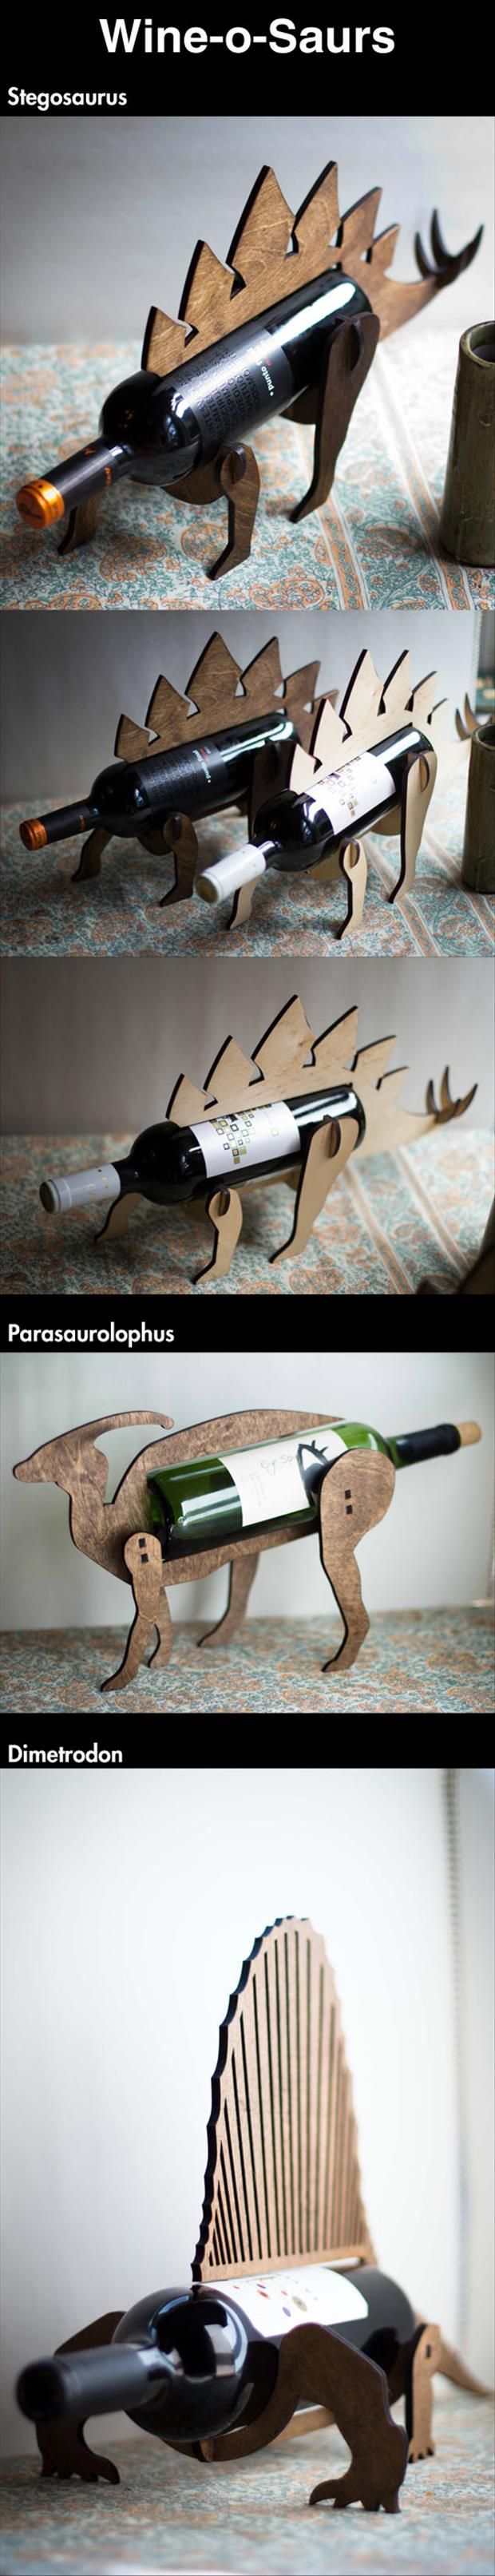 Dinosaur Wine Racks - Wine-O-Saurus!